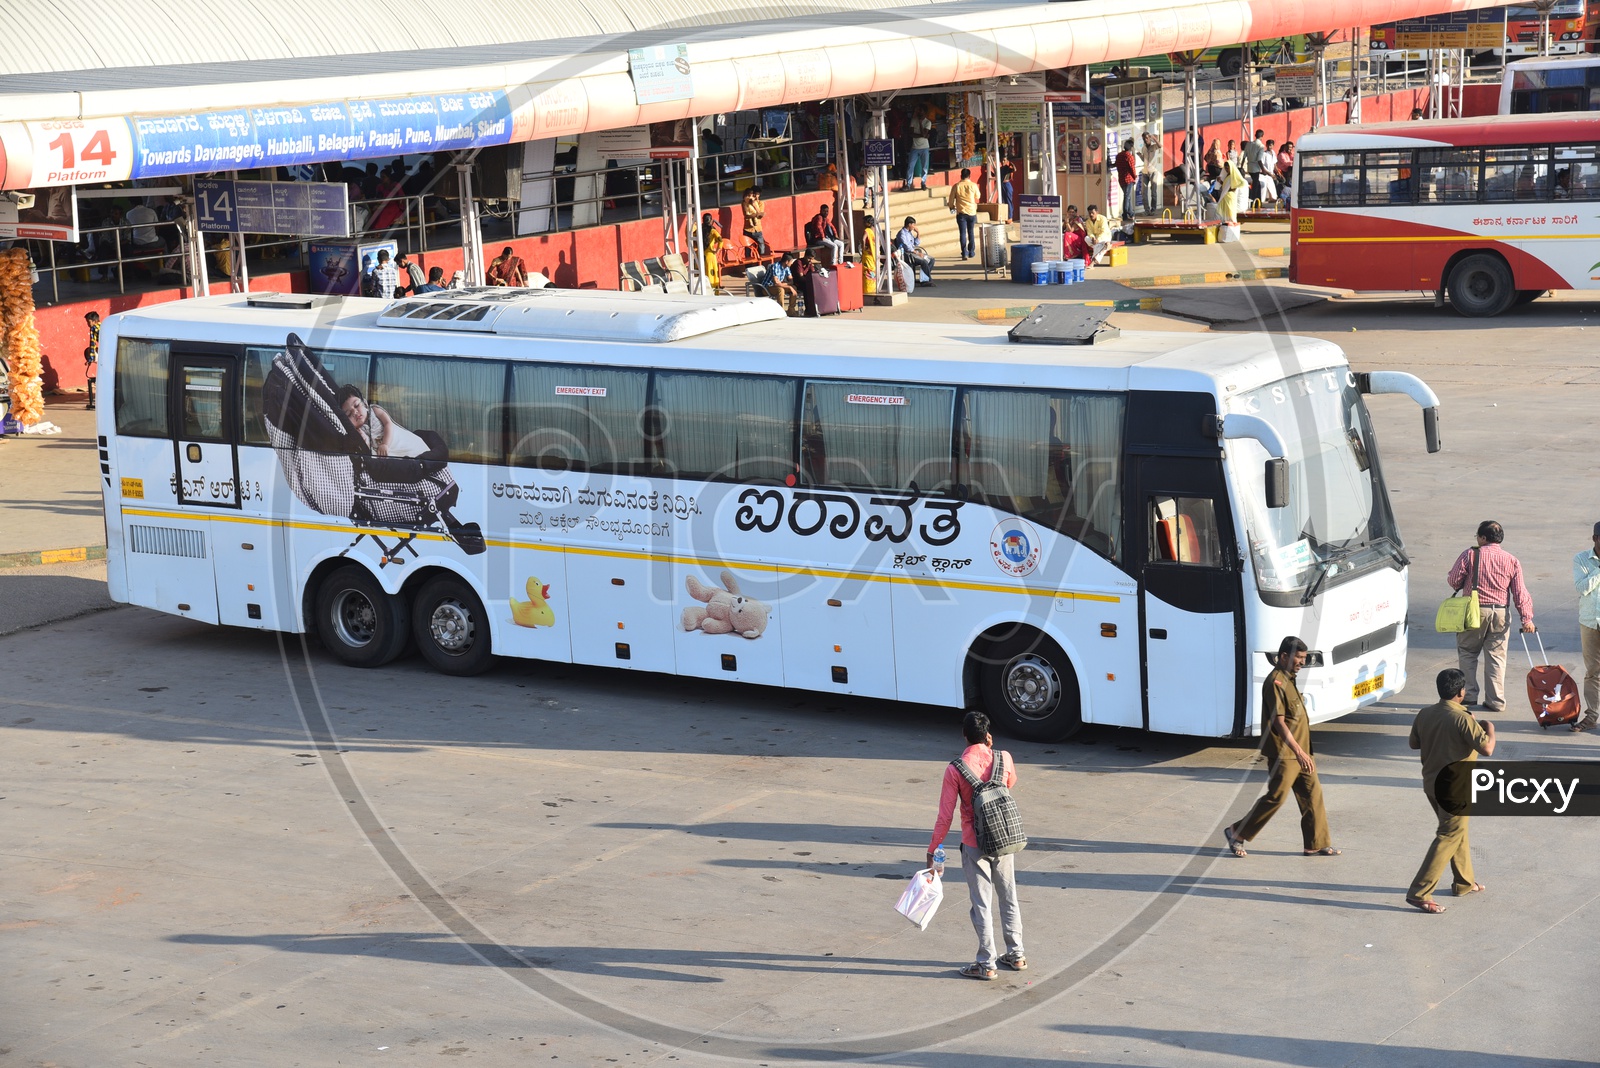 Airavat club class bus at platform 14 in Majestic bus station, Bangalore